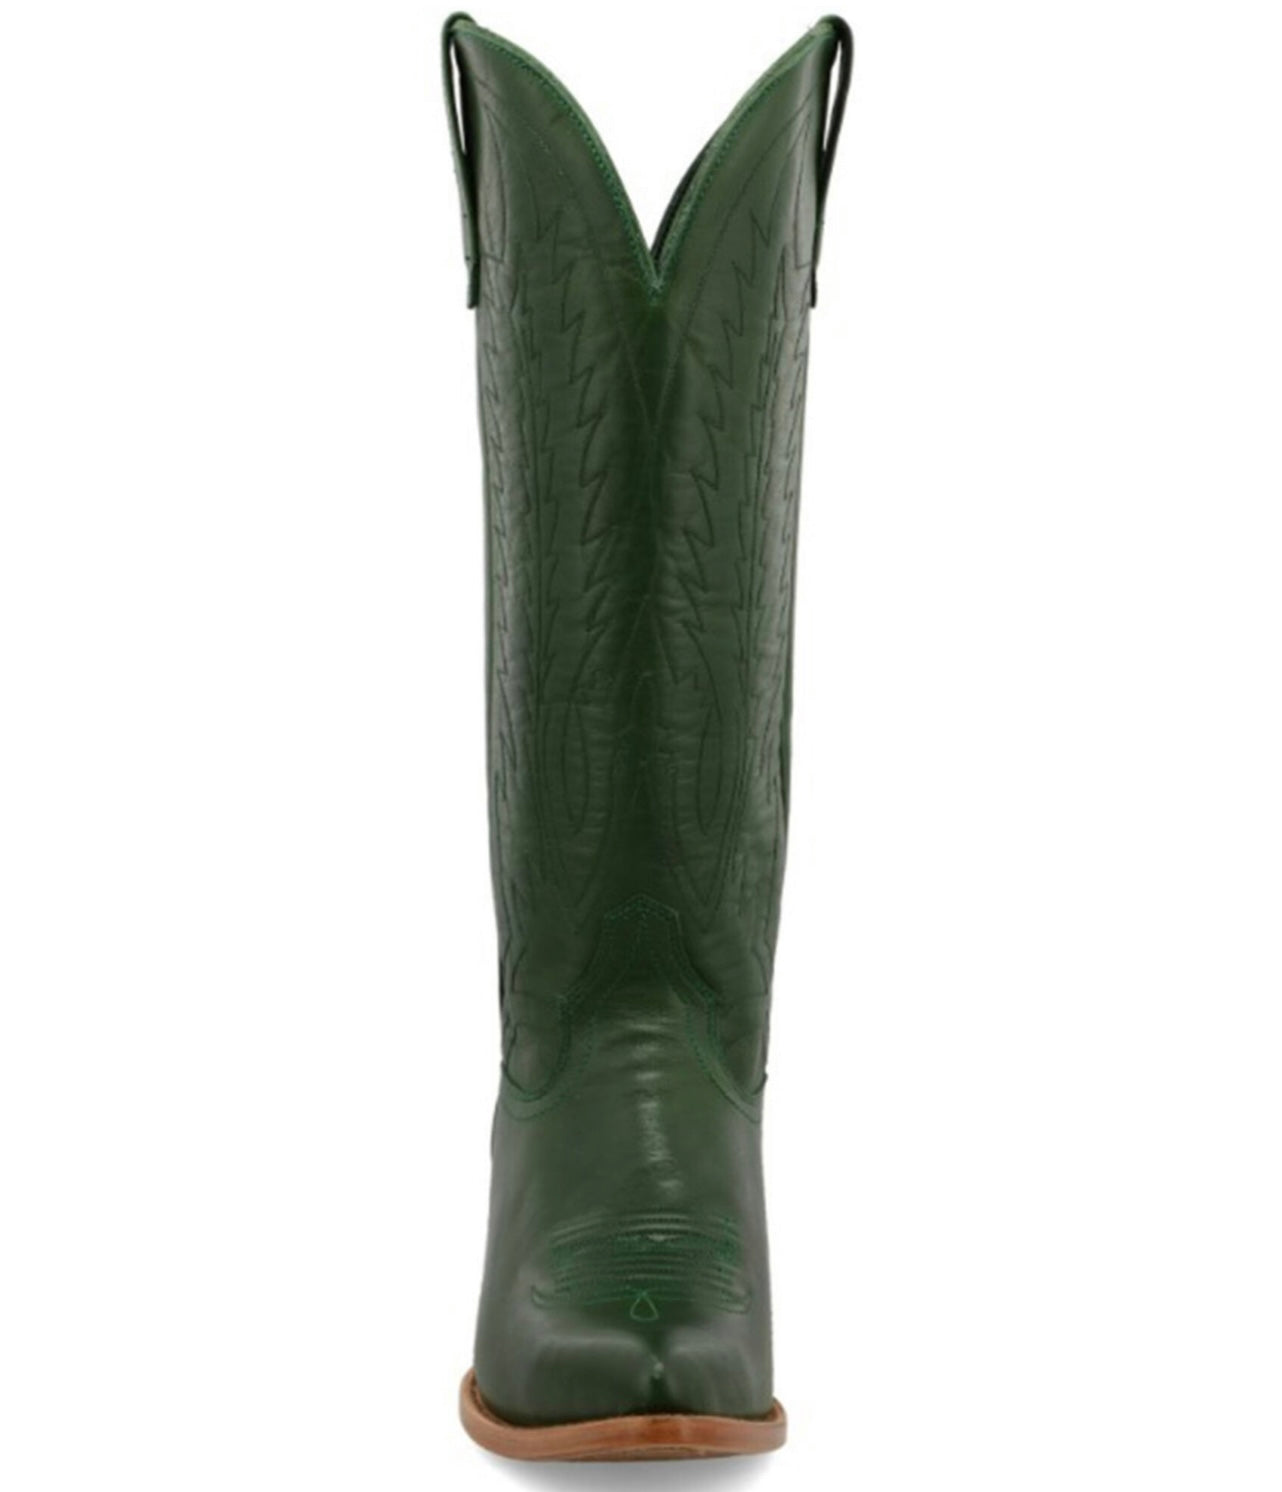 Black Star Emerald Eden boots